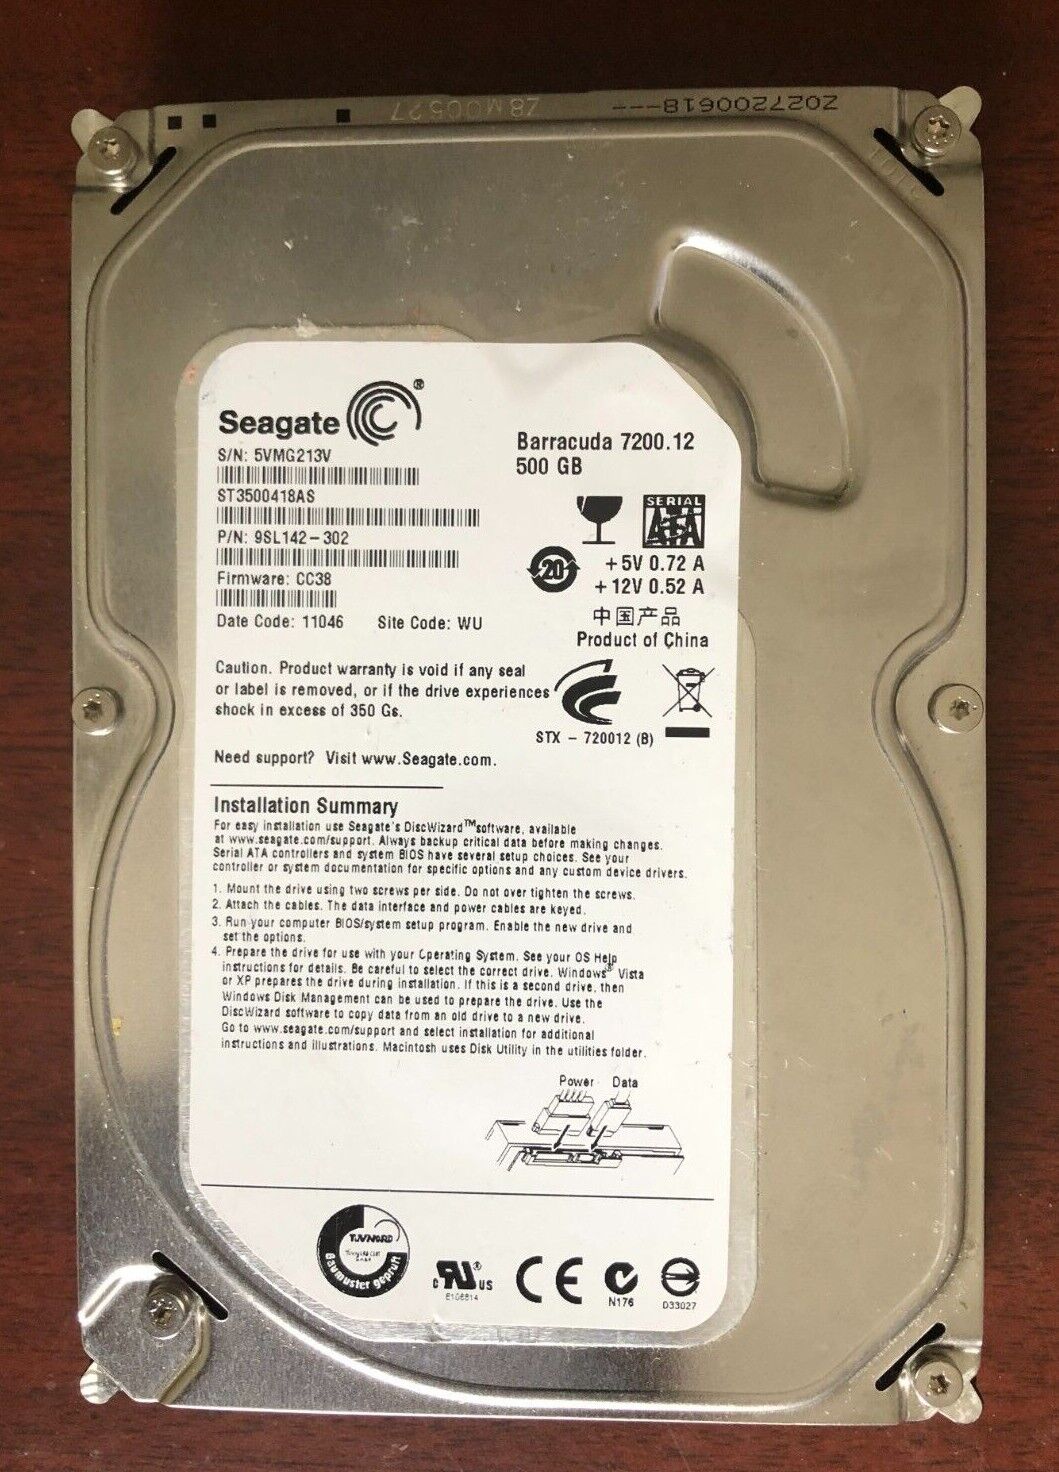 Seagate ST3500418AS Barracuda 7200.12 500GB 9SL142-302 Desktop Hard Drive